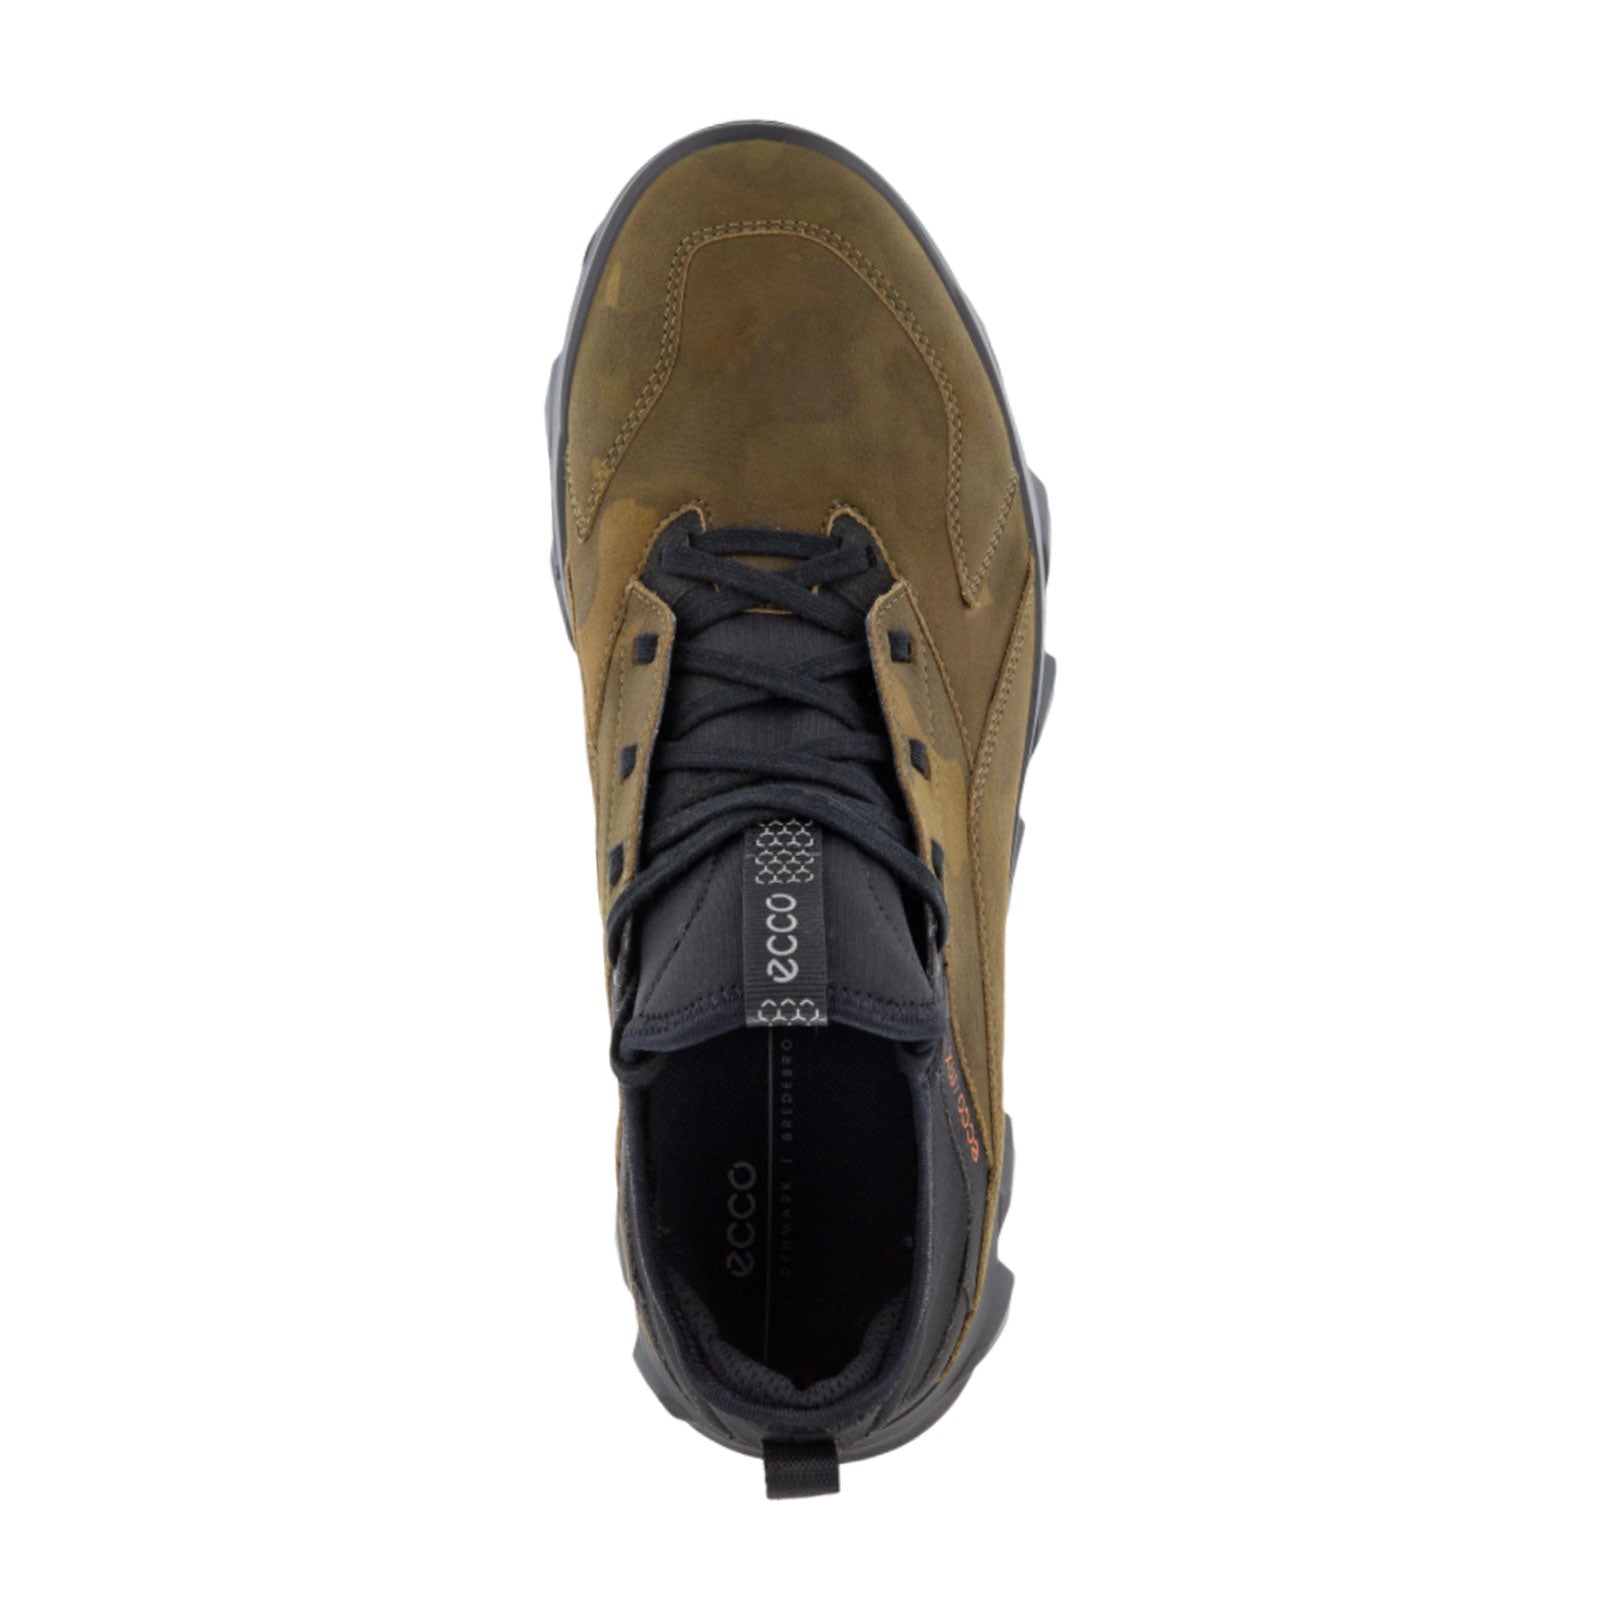 Ecco Low Hiker - Tarmac/Black - The Heel Shoe Fitters